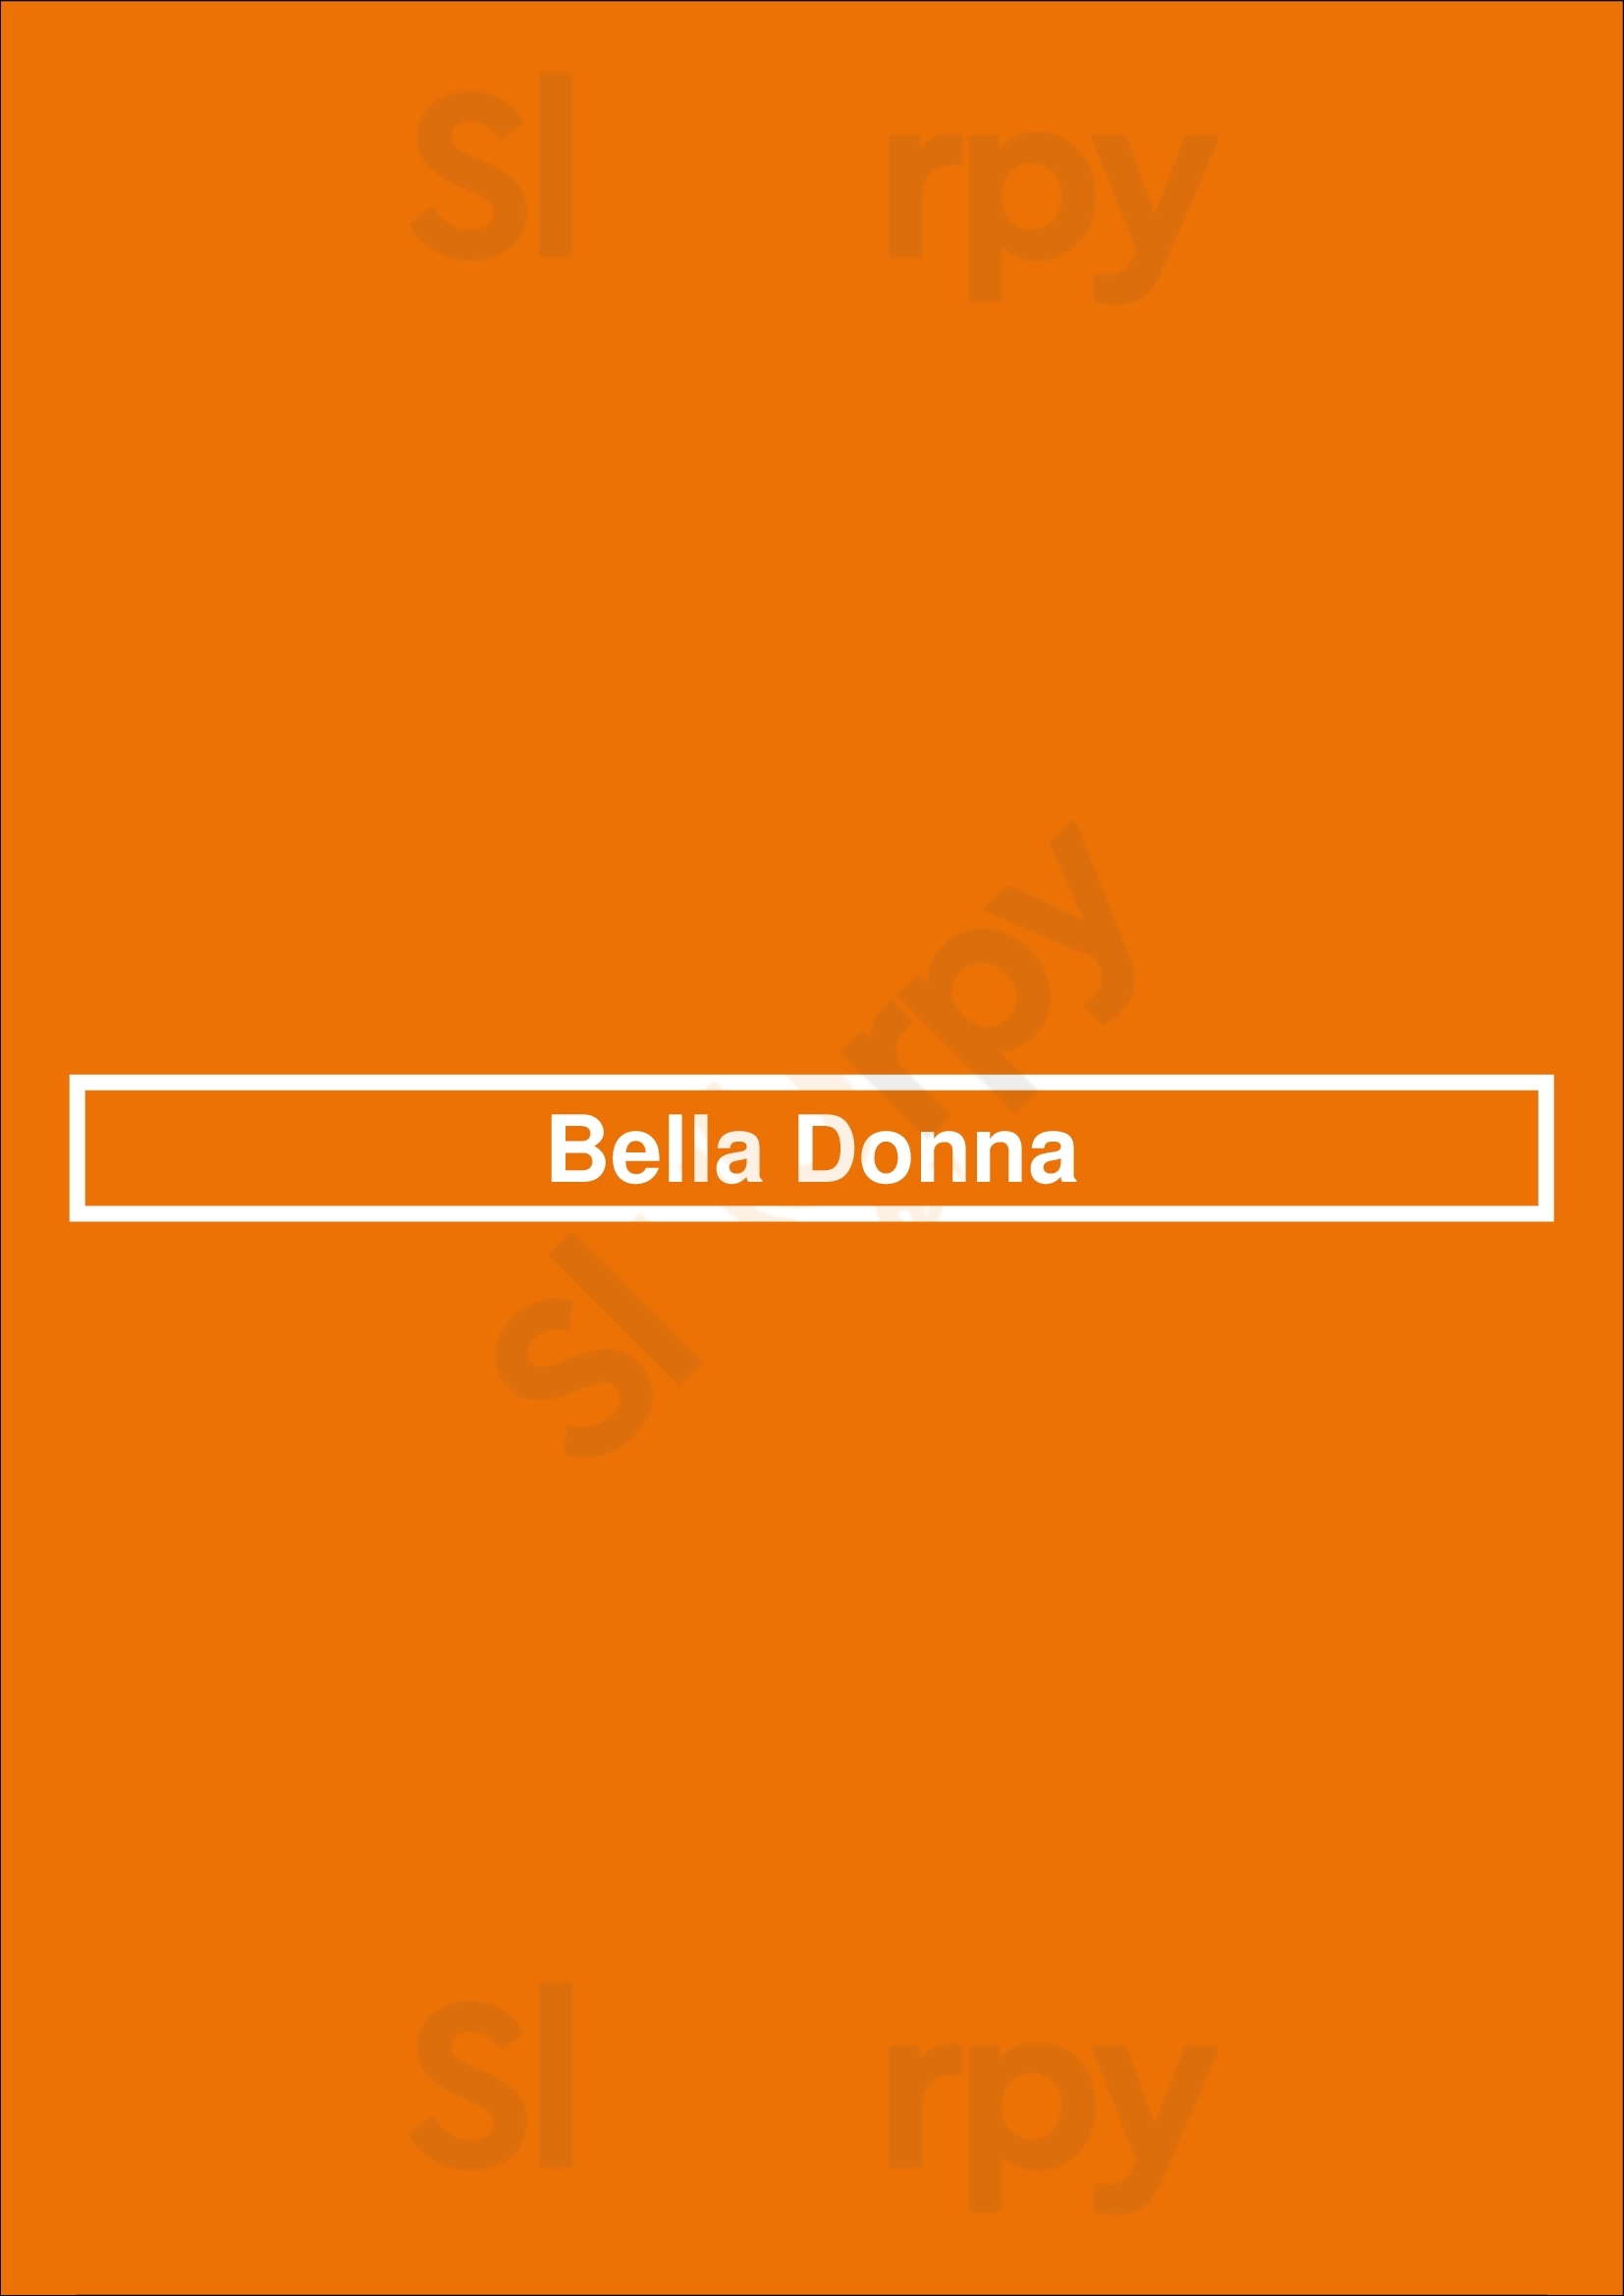 Bella Donna Uithoorn Menu - 1